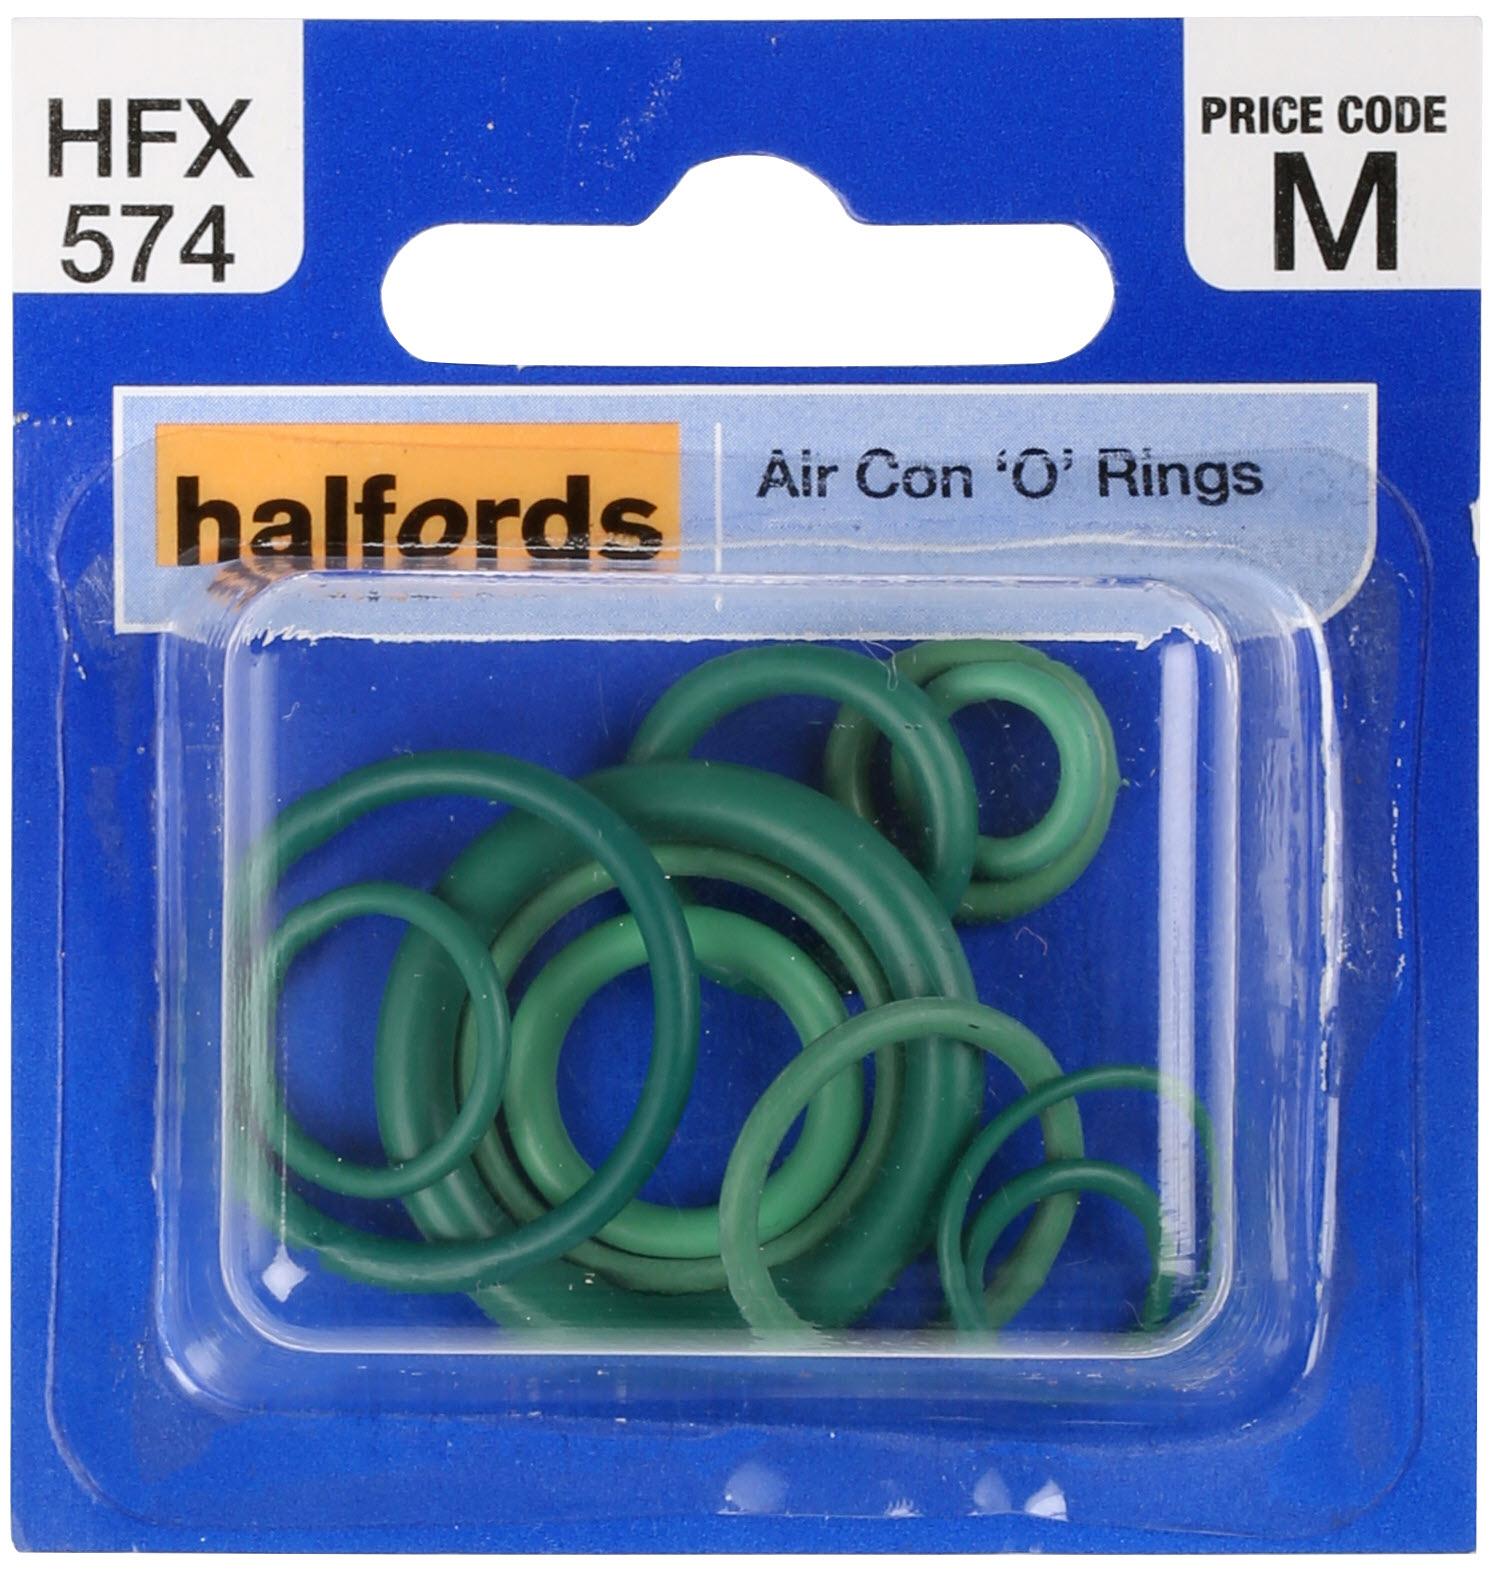 Halfords Air Con O Rings